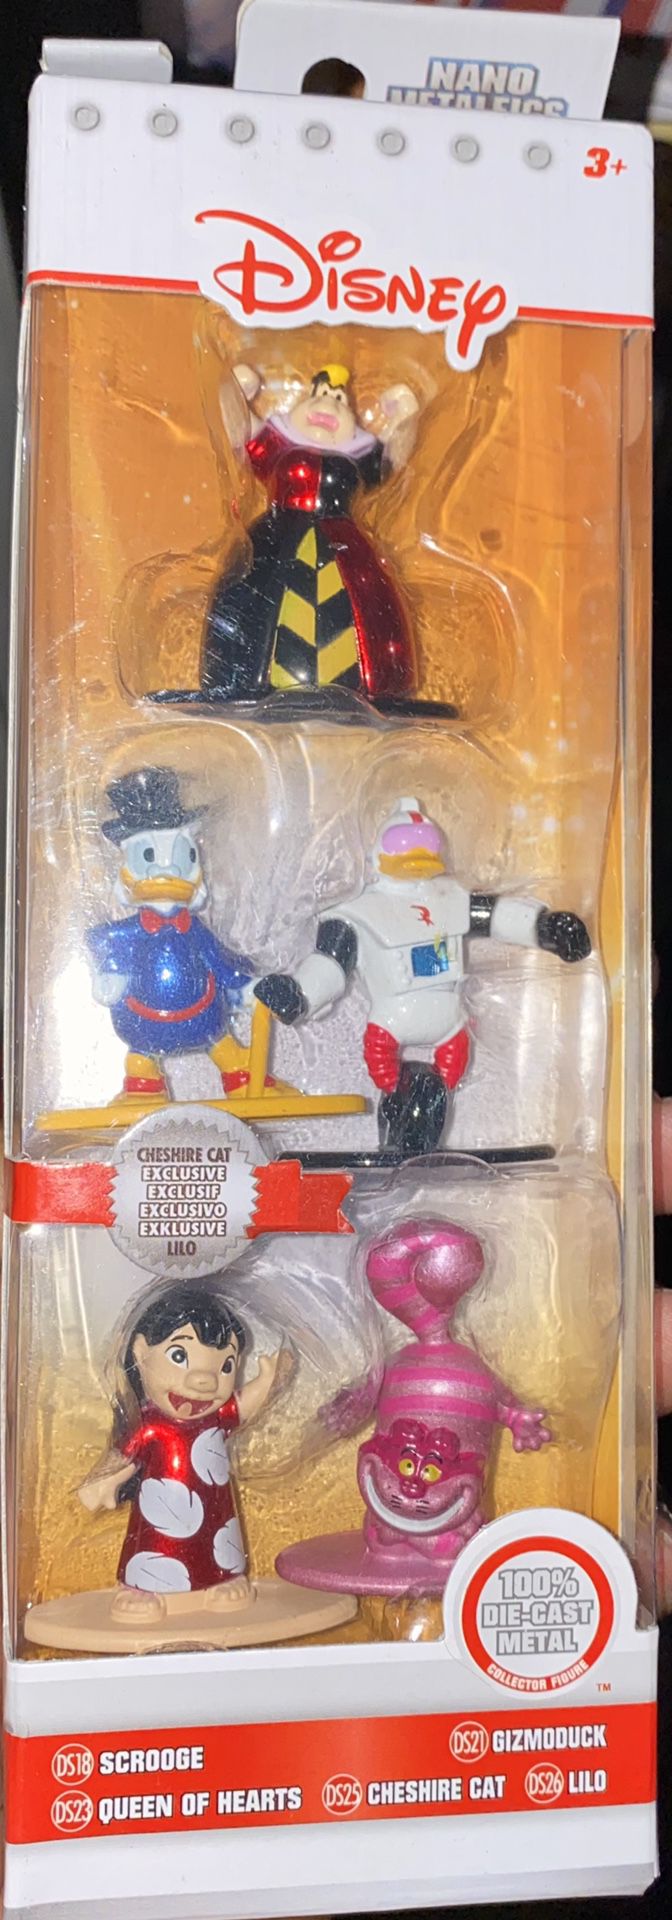 Brandnew collectibles collection diecast Disney figures, $15